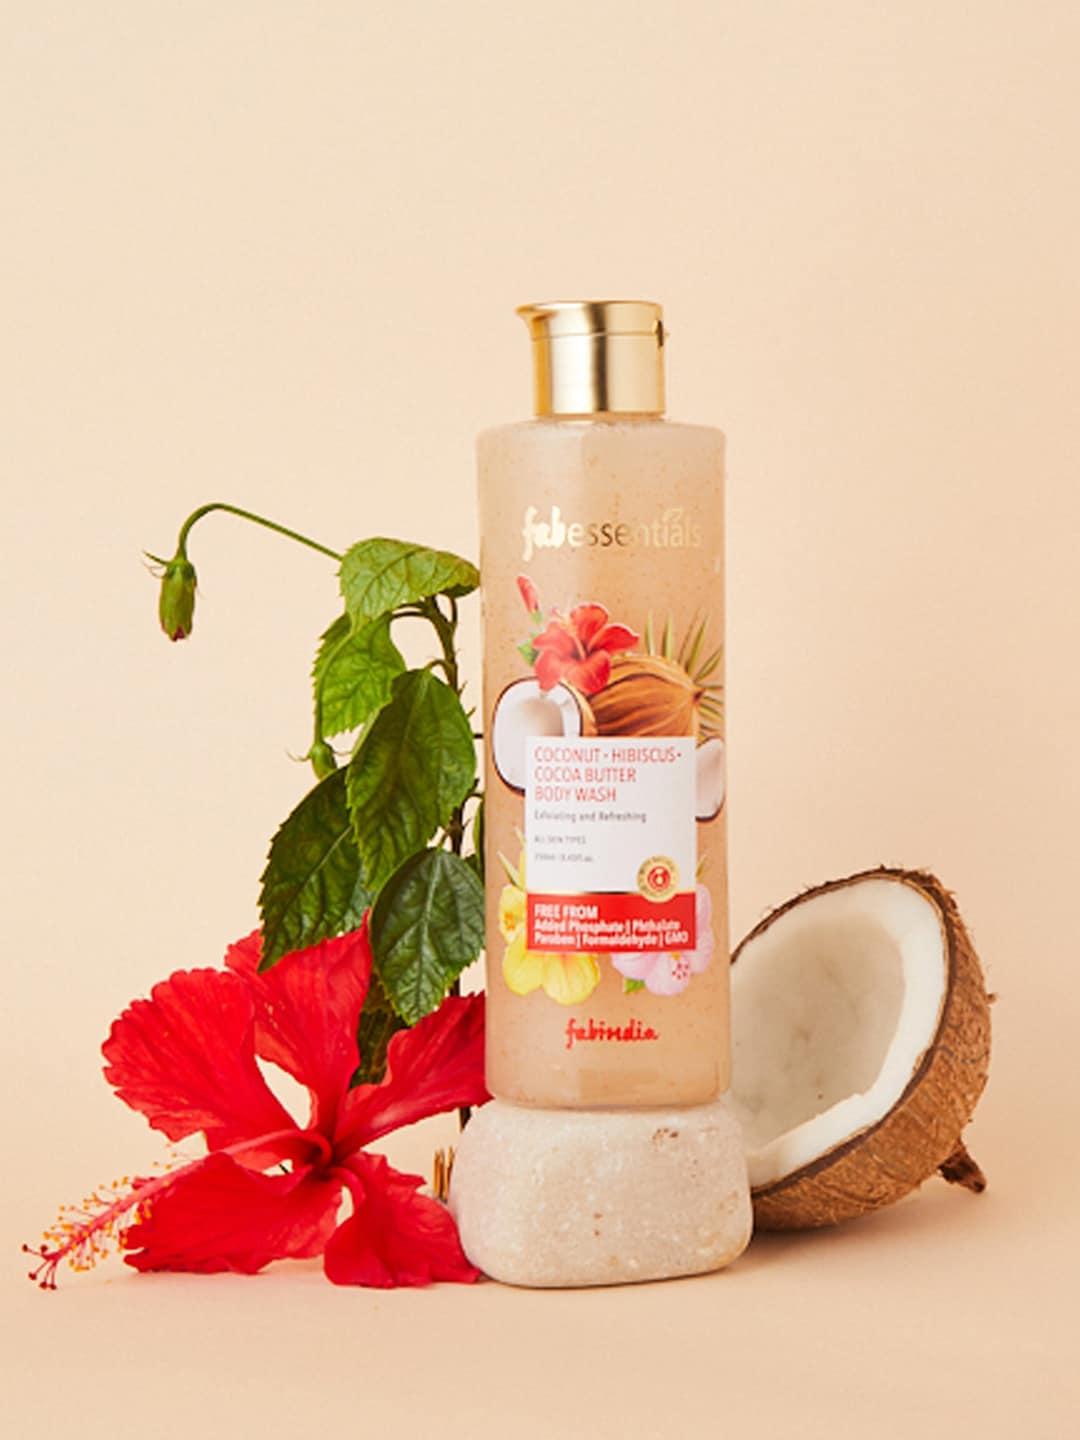 Fabindia Coconut Hibiscus Cocoa Butter Body Wash - 250 ml